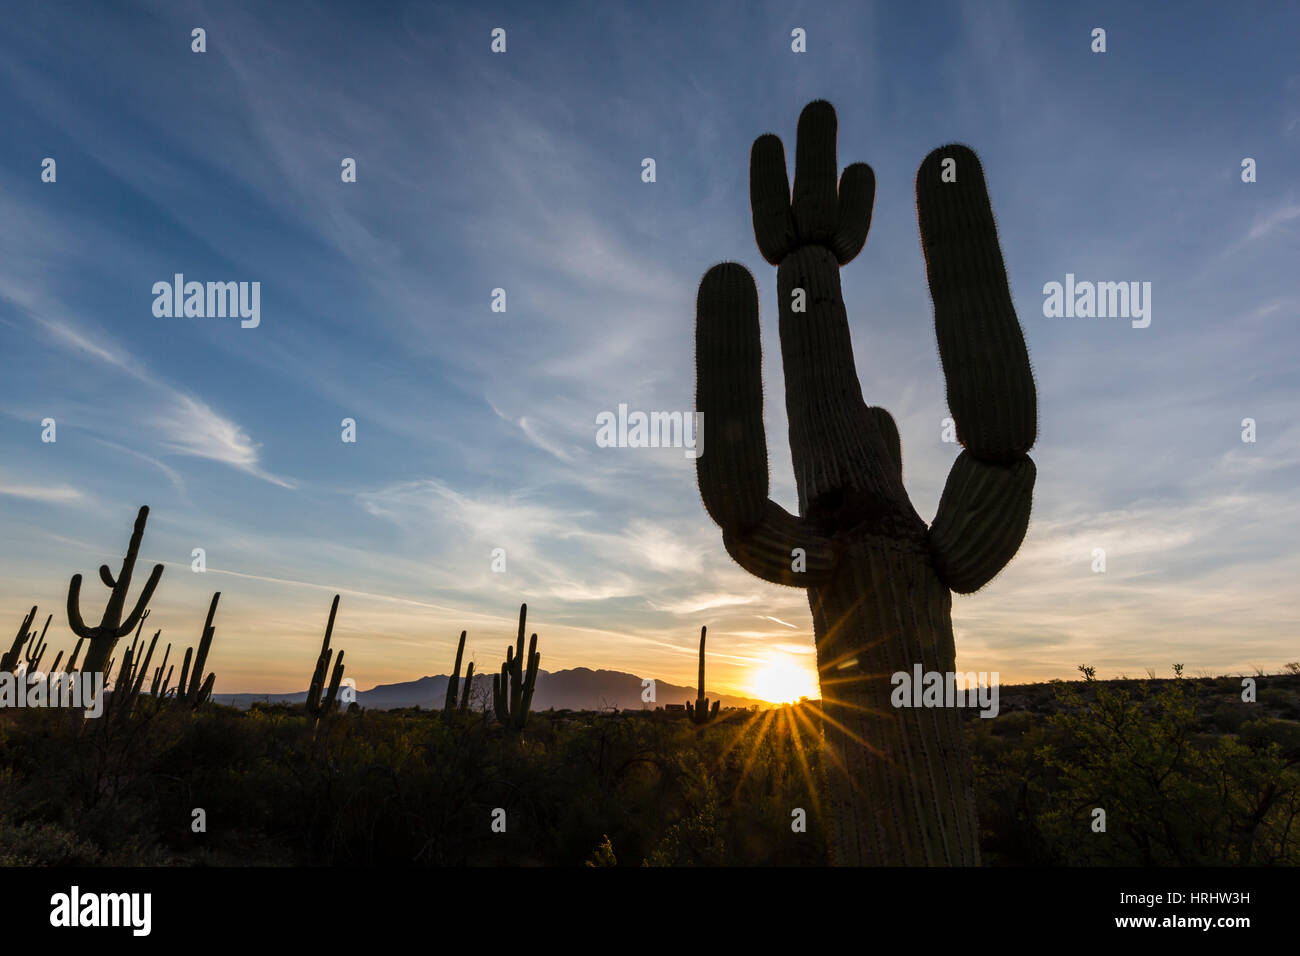 Sonnenaufgang am Saguaro-Kaktus in Blüte, Sweetwater Preserve, Tucson, Arizona, Vereinigte Staaten von Amerika, Nordamerika Stockfoto